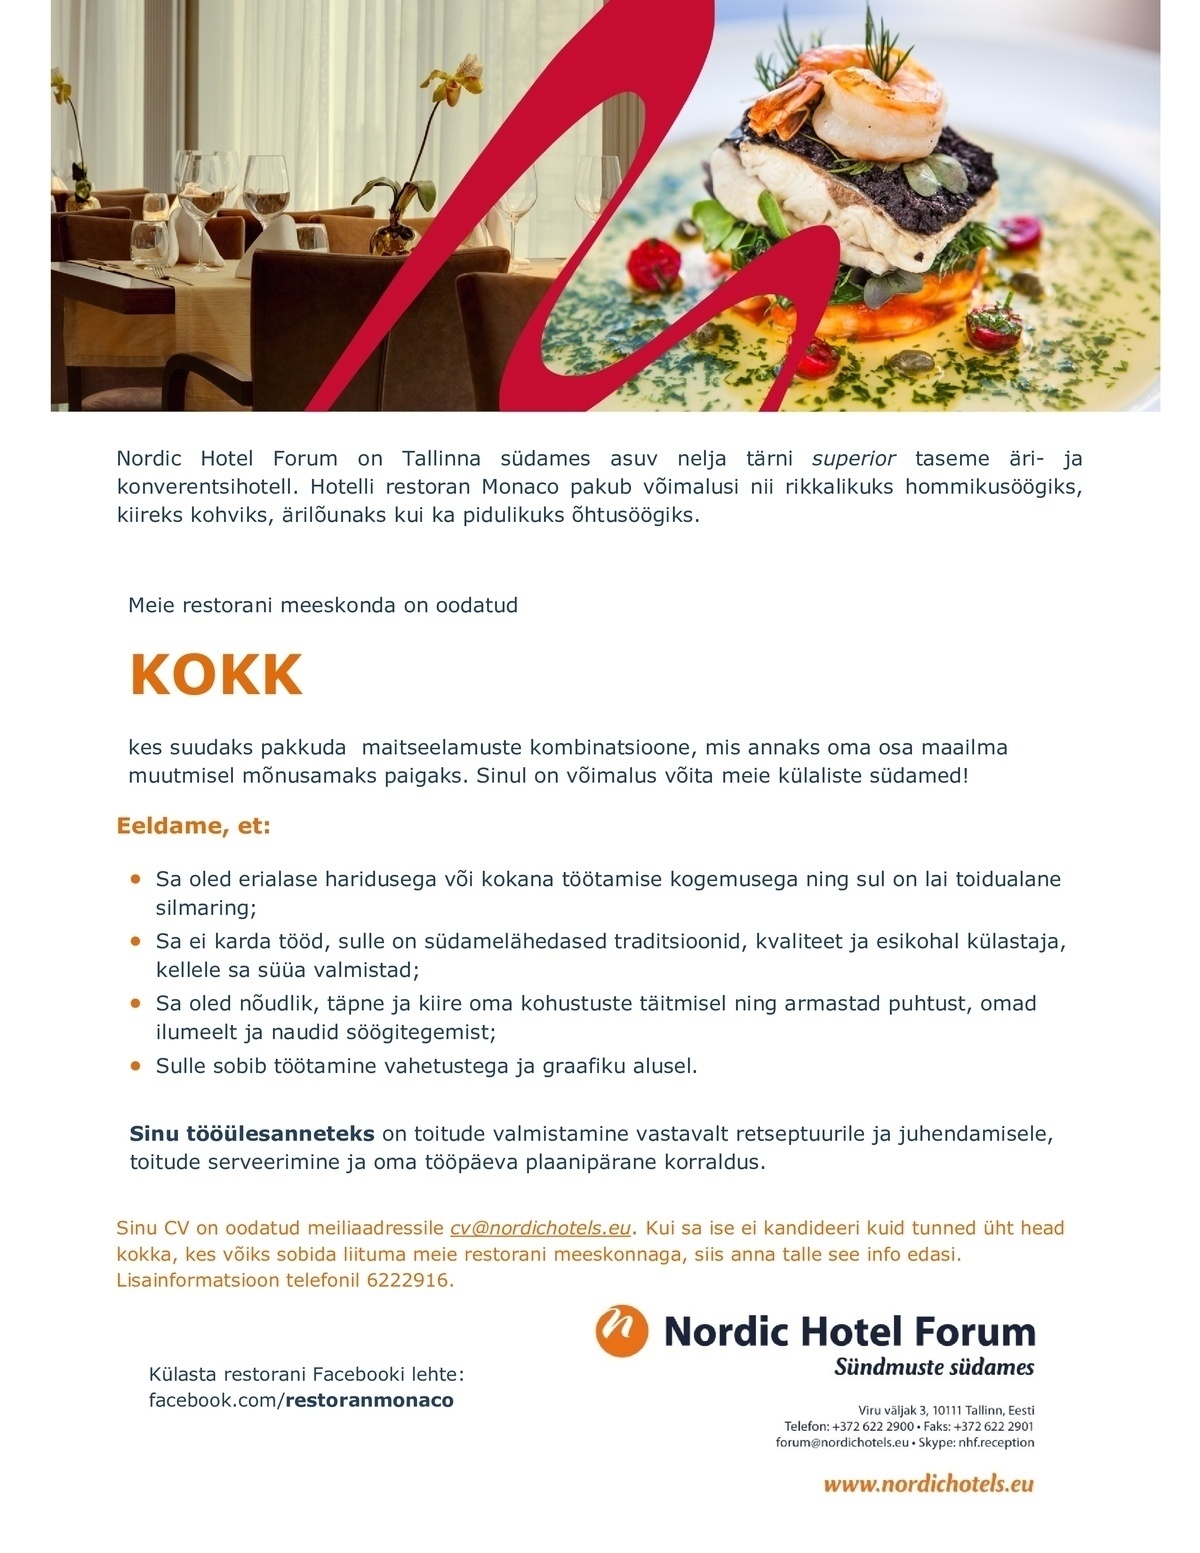 Nordic Hotels OÜ Kokk 